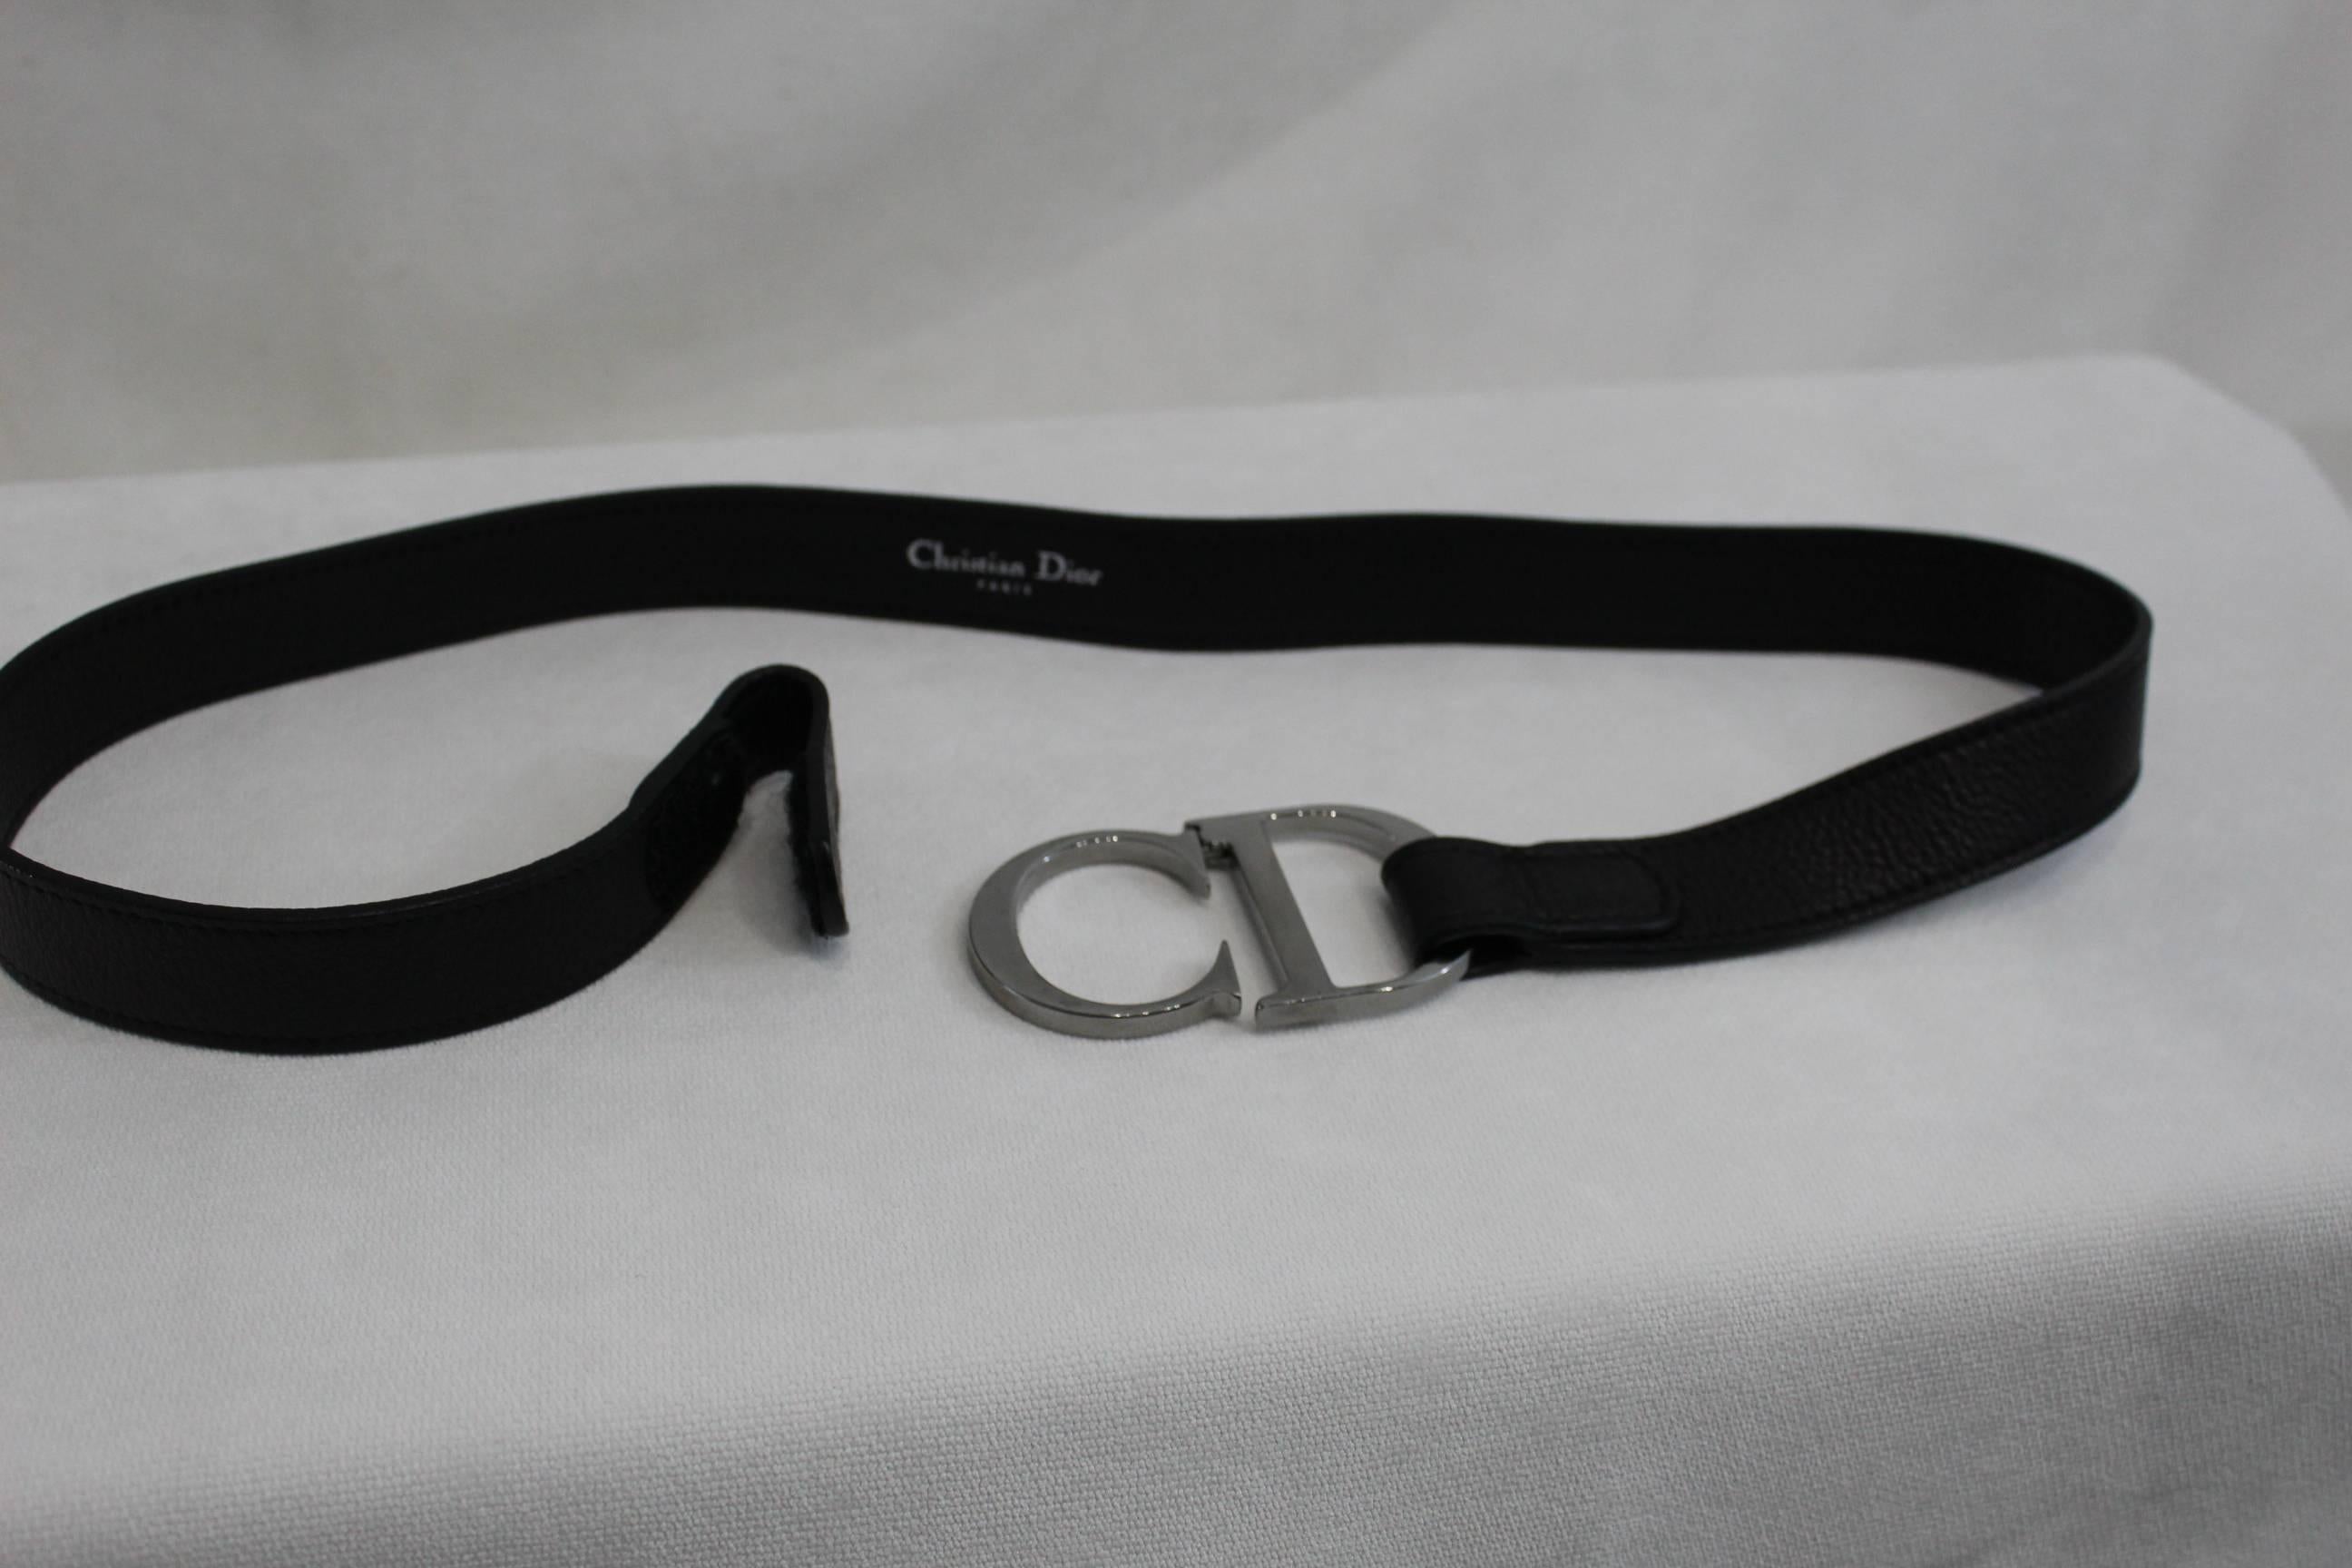 Black Christian Dior Vintage Stainlees steel belt